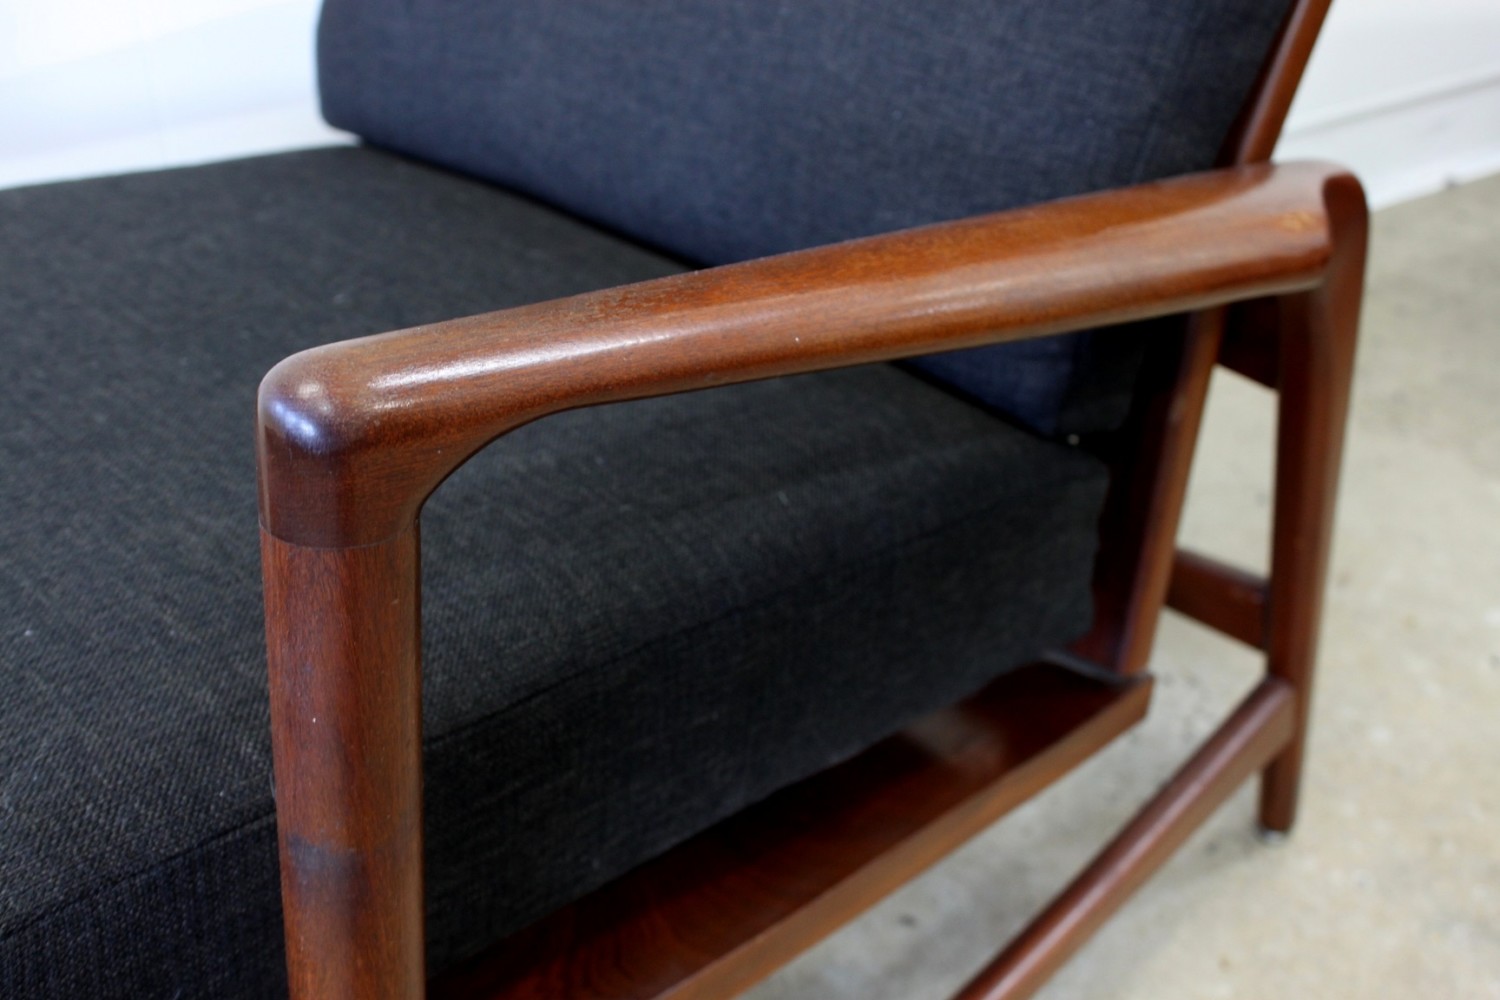 IB Kofod Larsen Chair and Footstool